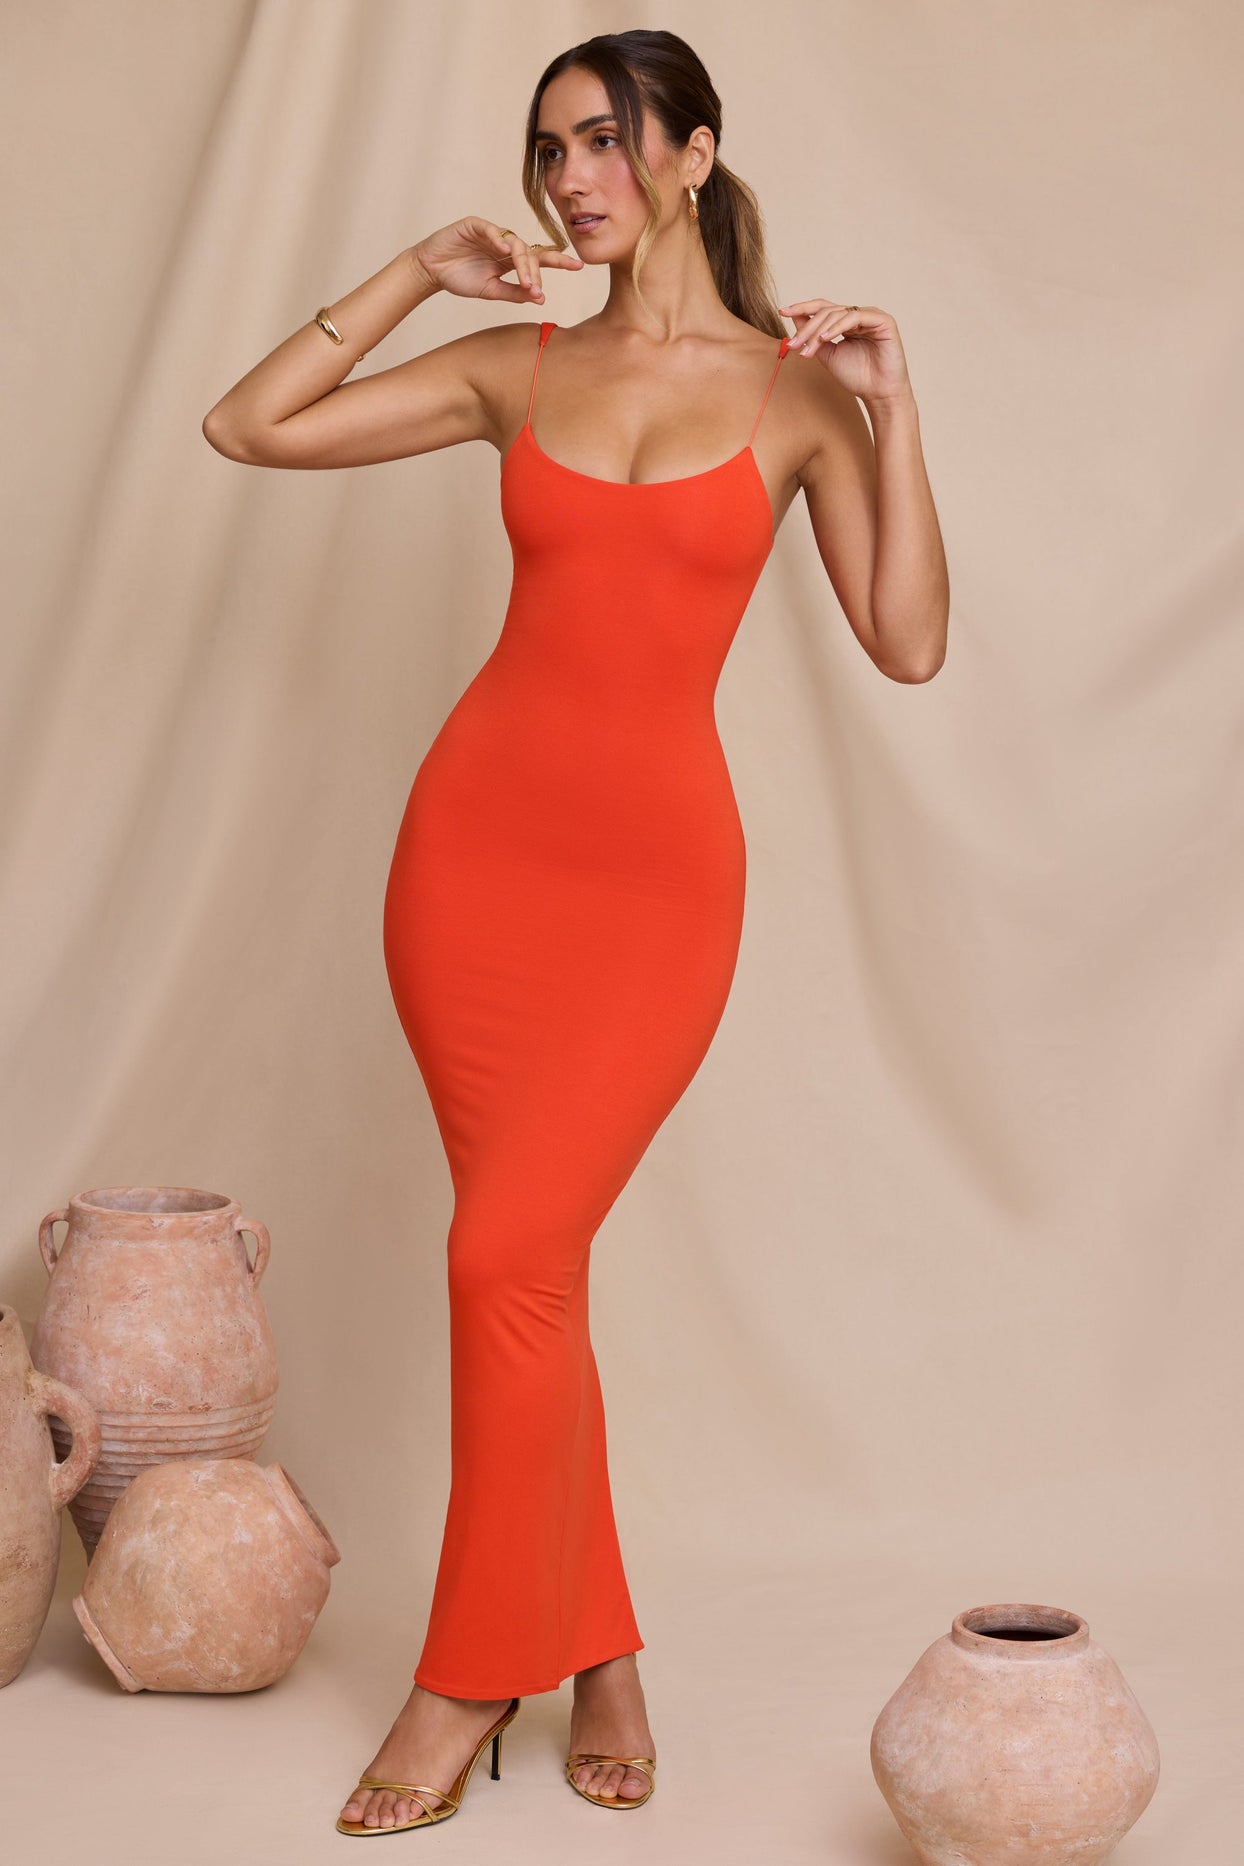 Reign Micro Strap Detail Maxi Dress in Tangerine